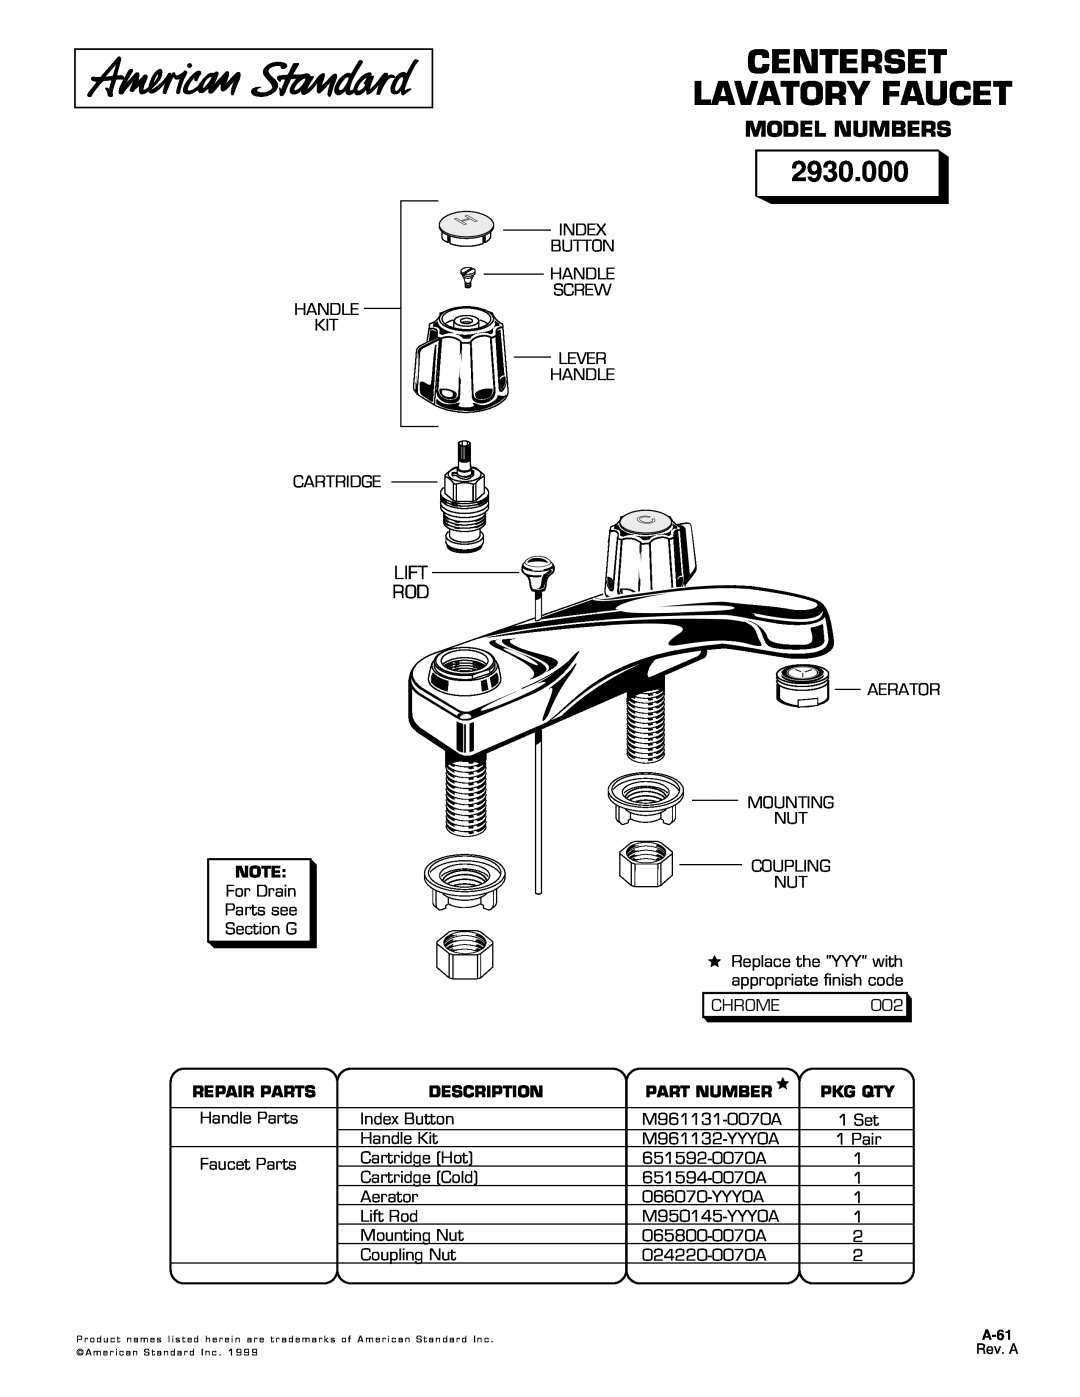 American Standard 2930.000 manual Centerset Lavatory Faucet, Model Numbers, Lift Rod, Repair Parts, Description, Pkg Qty 